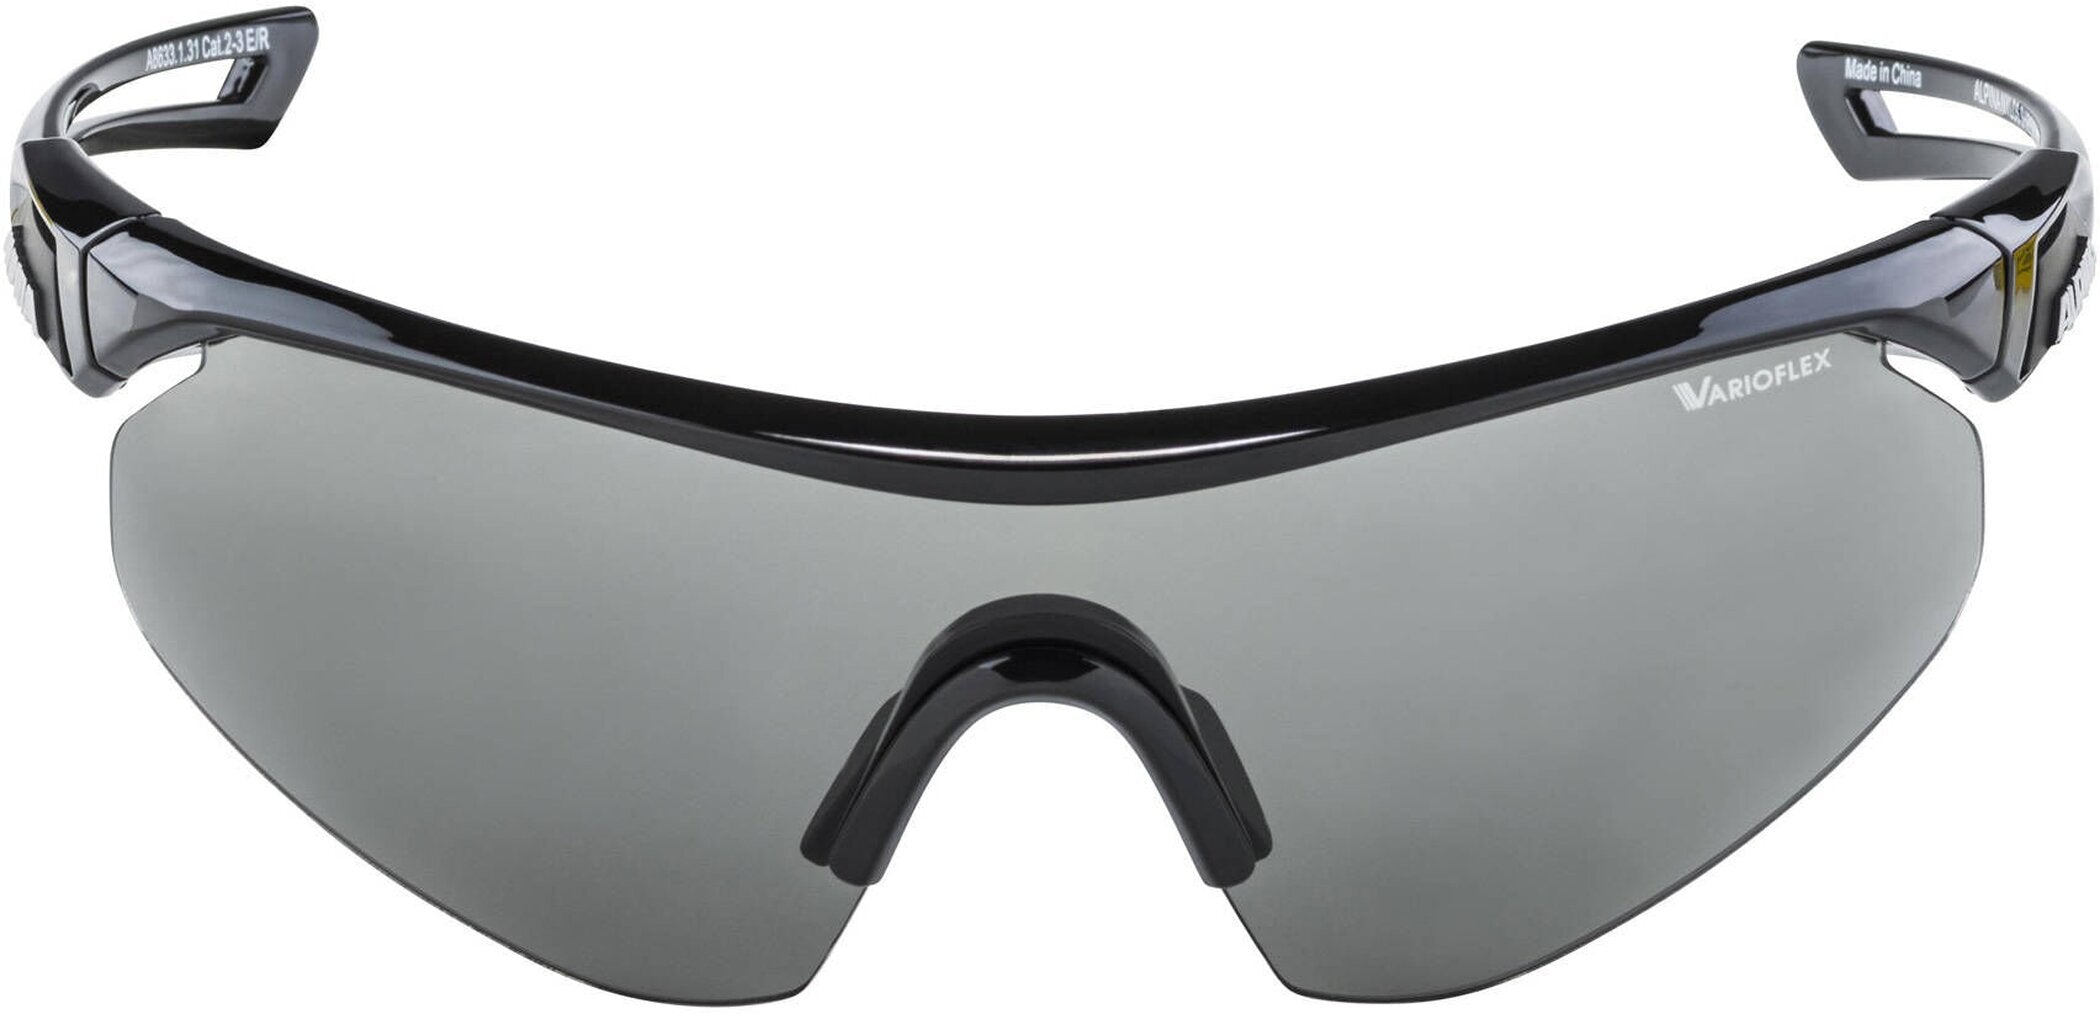 Sportbrille / Sonnenbrille "Nylos Shield"